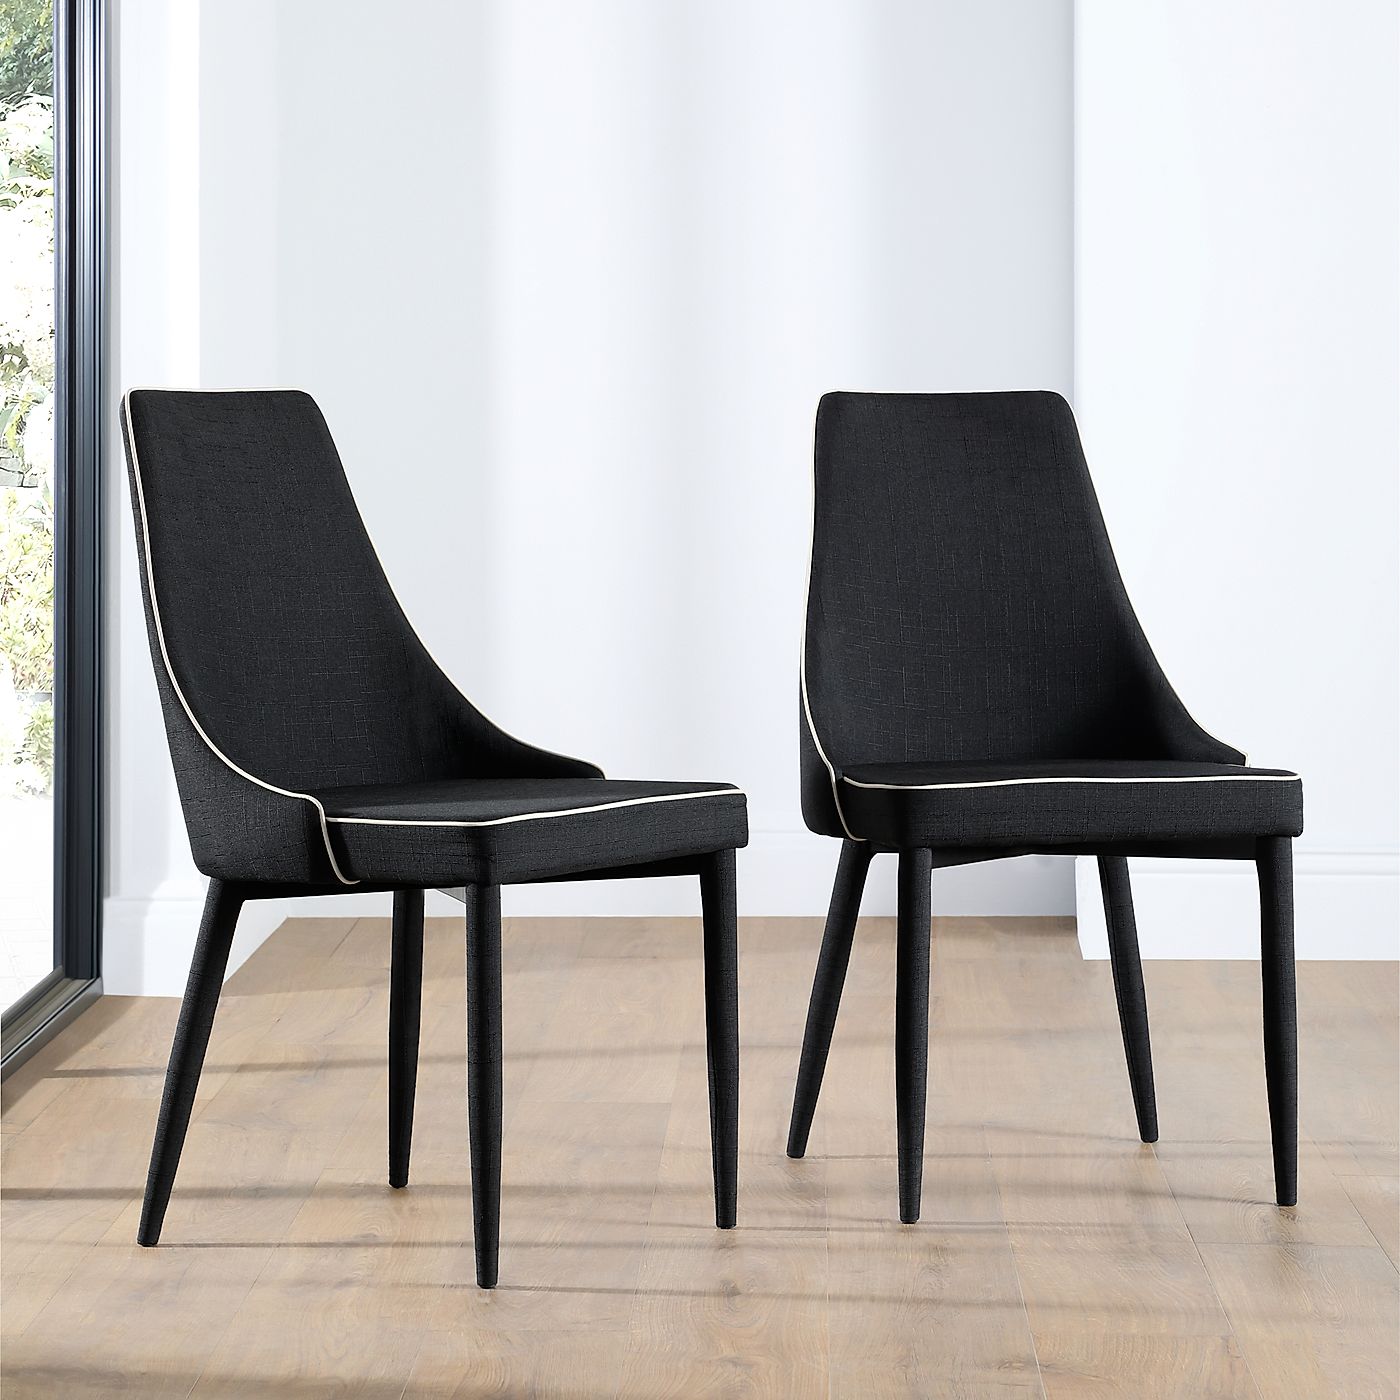 Modena Fabric Dining Chair Black (Black Leg) Only £79.99 | Furniture Choice